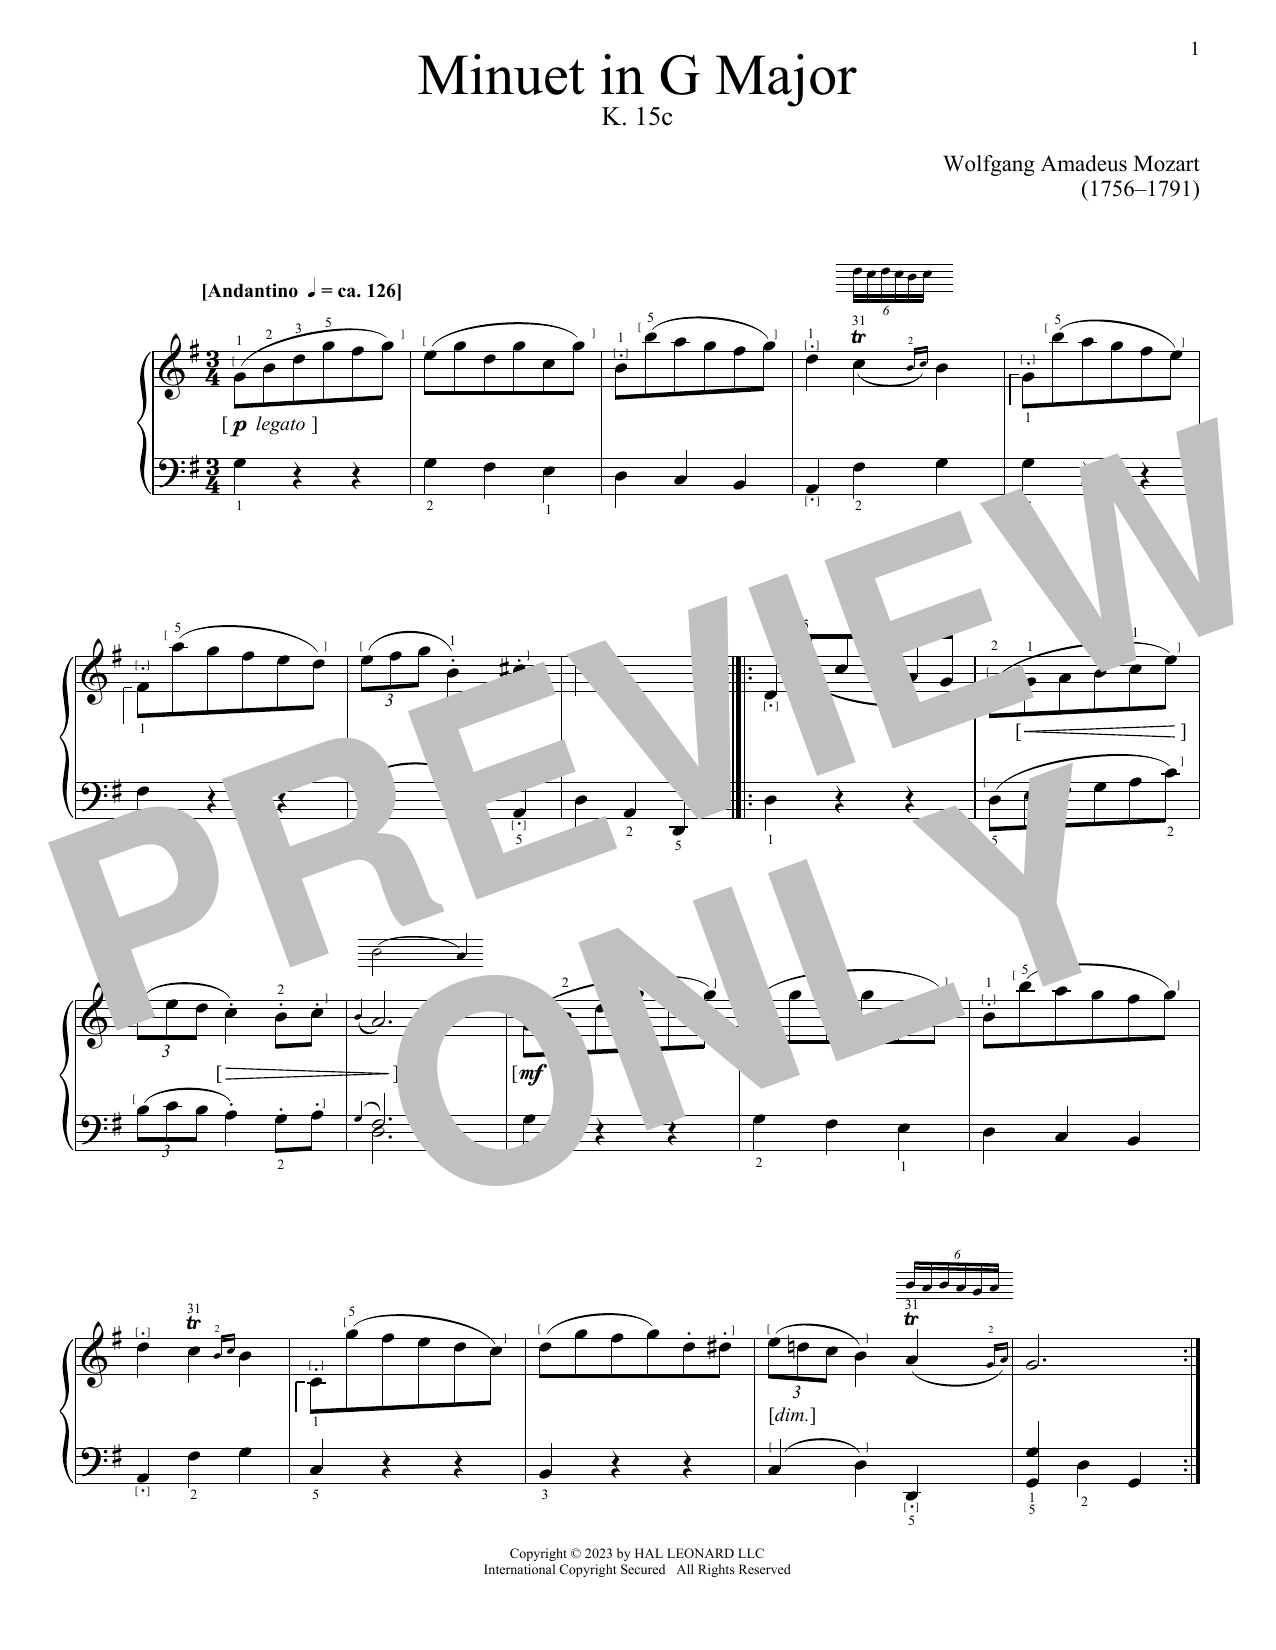 Download Wolfgang Amadeus Mozart Minuet in G Major, K. 15c Sheet Music